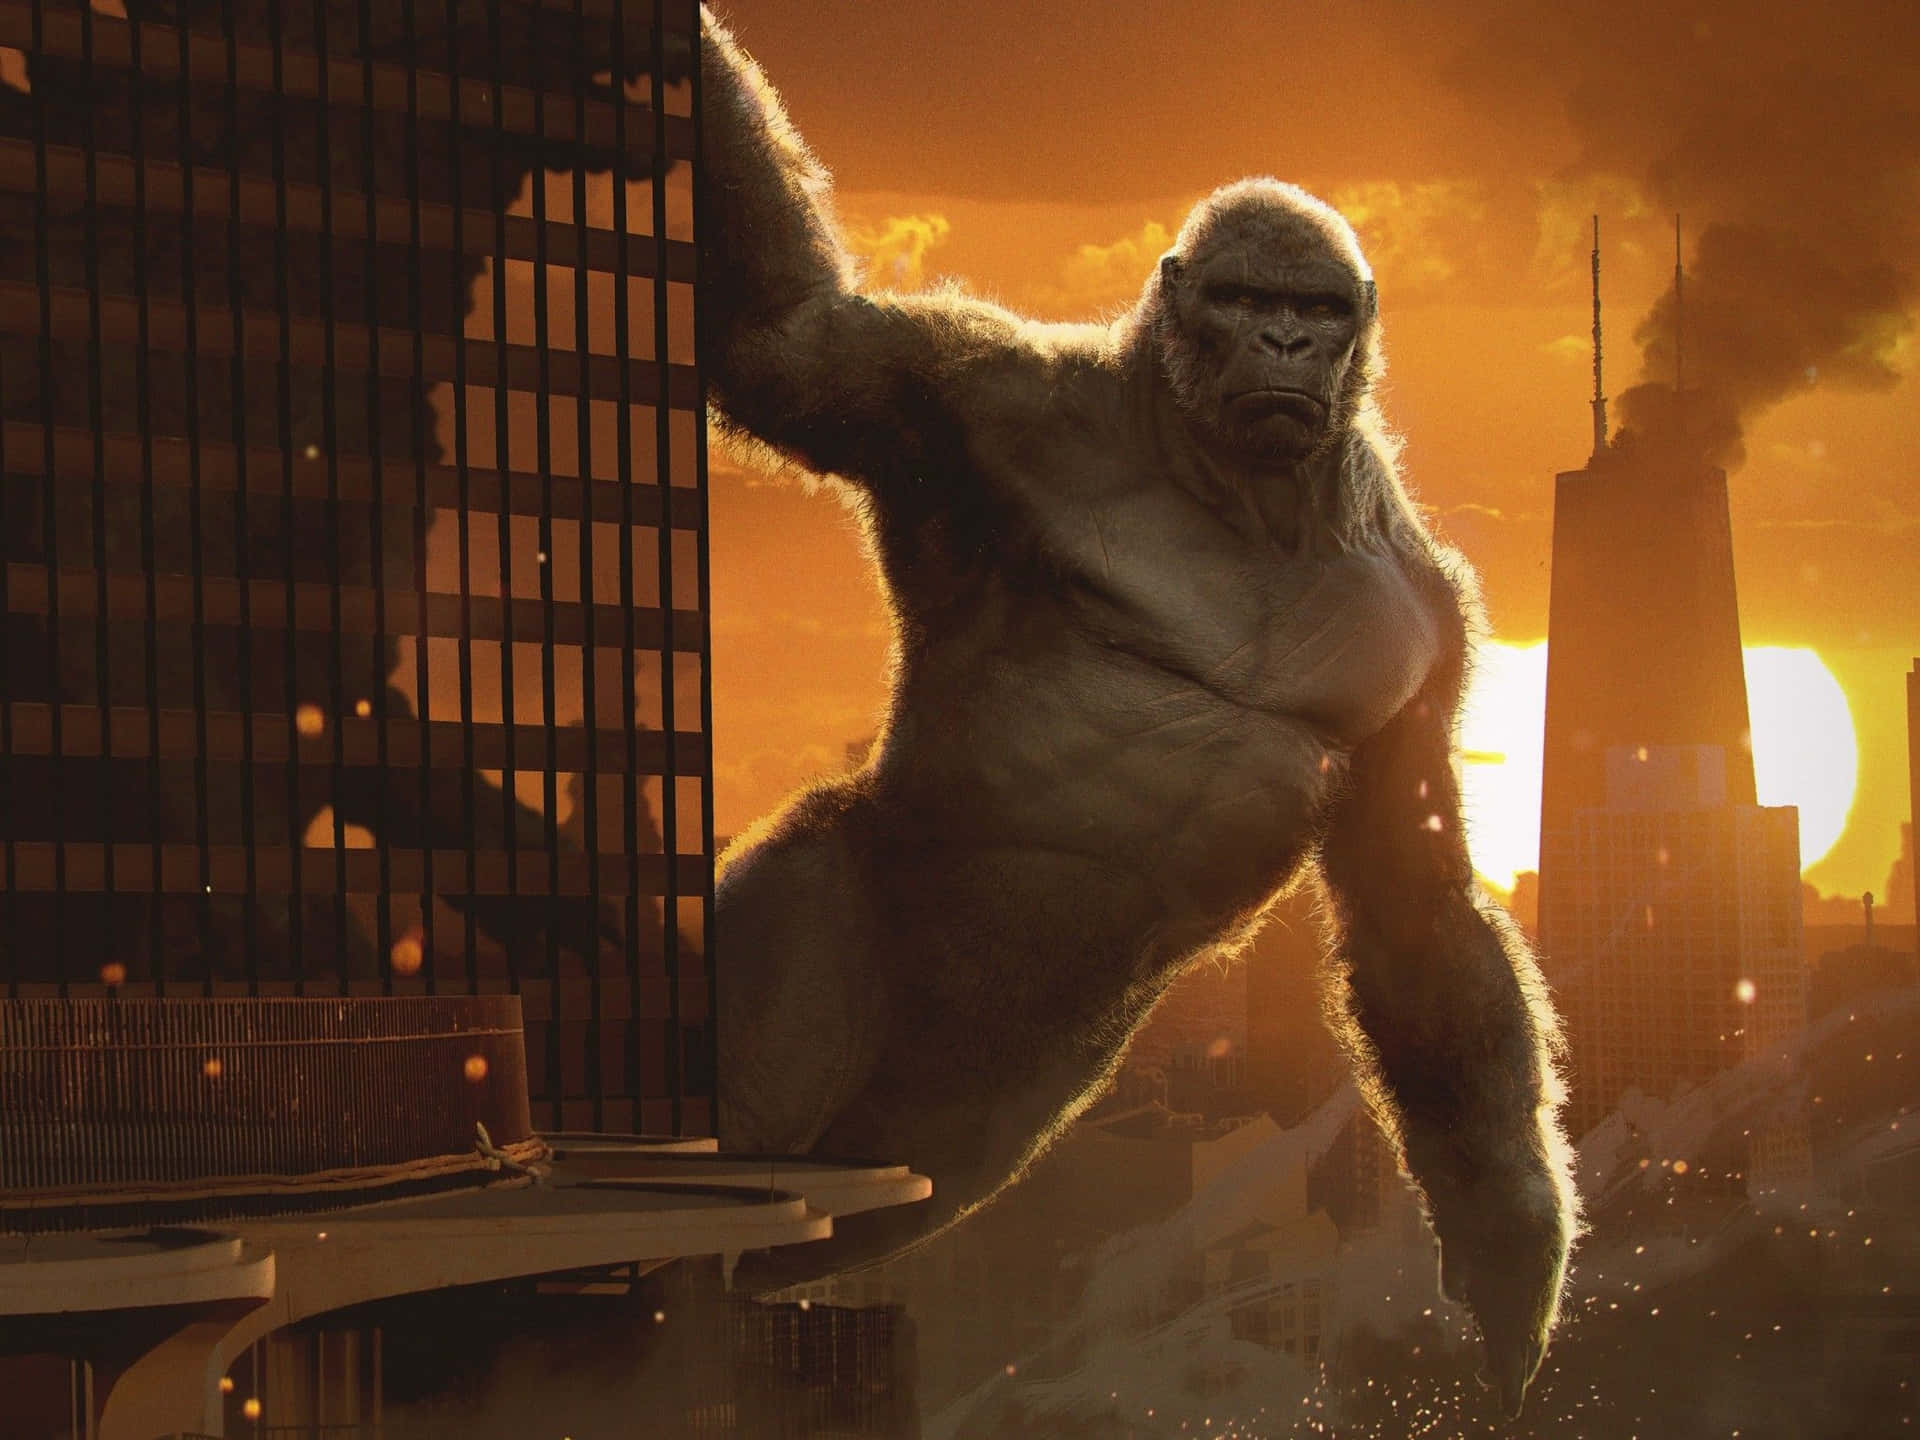 Godzillavs Kong 2048 X 1536 Bakgrund.